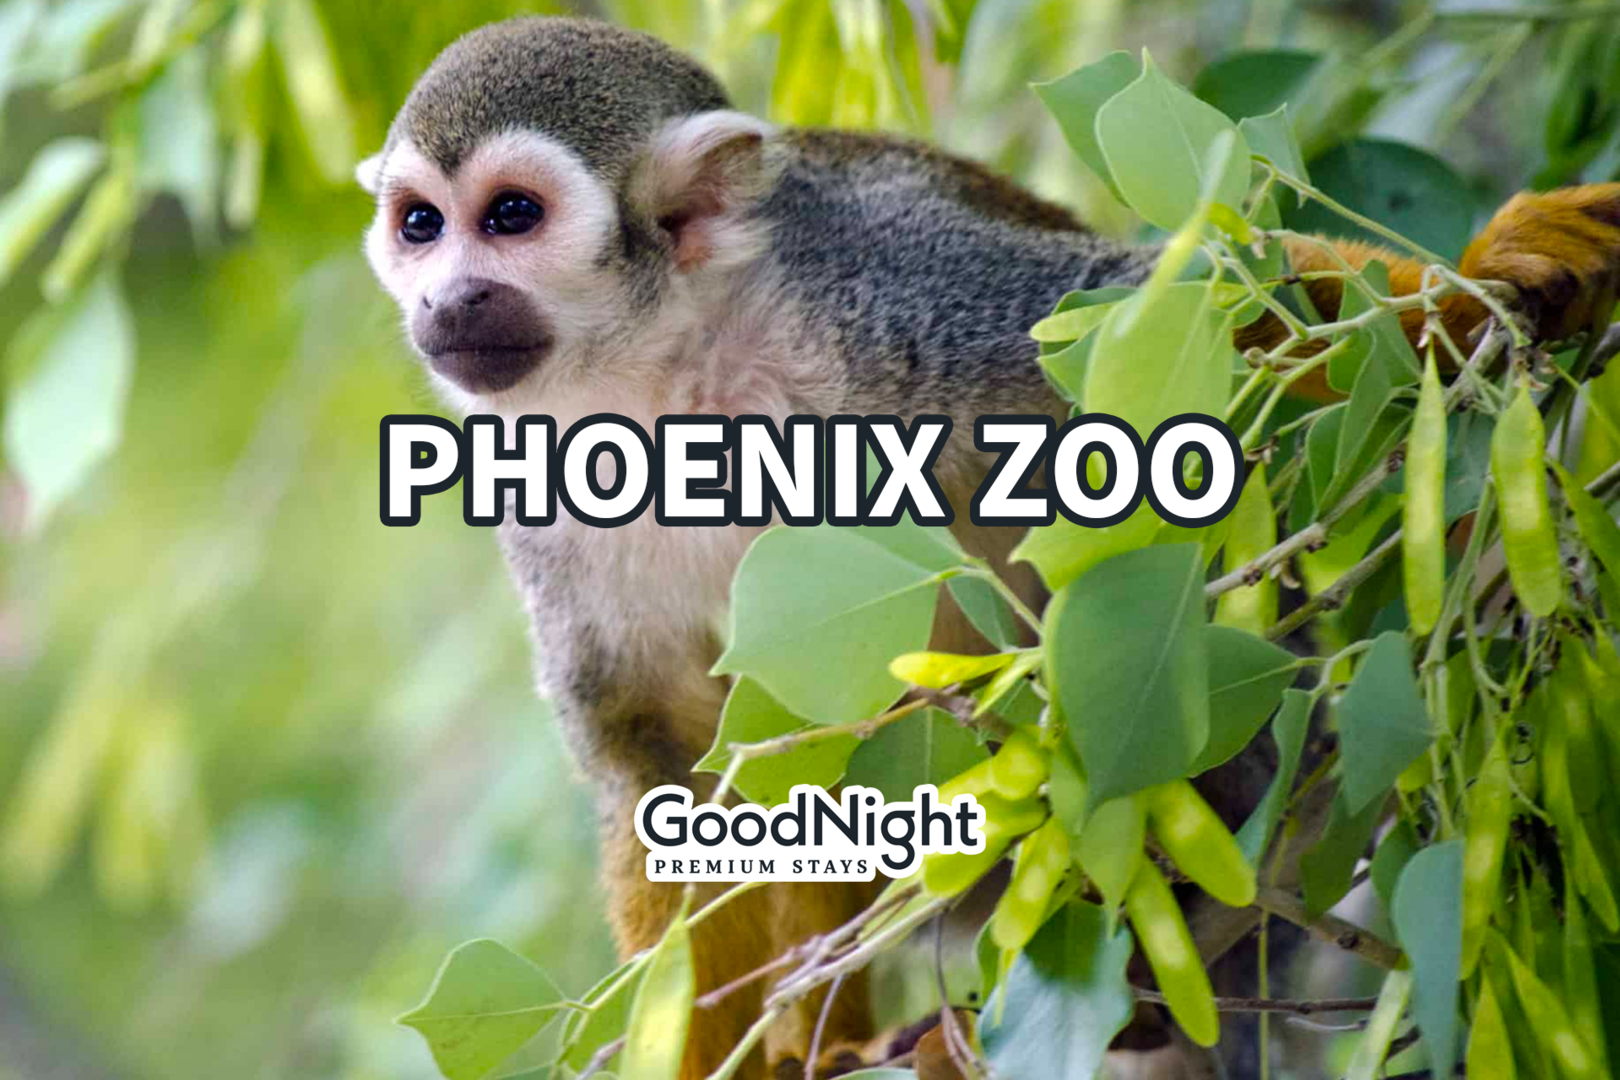 22 mins: Phoenix Zoo